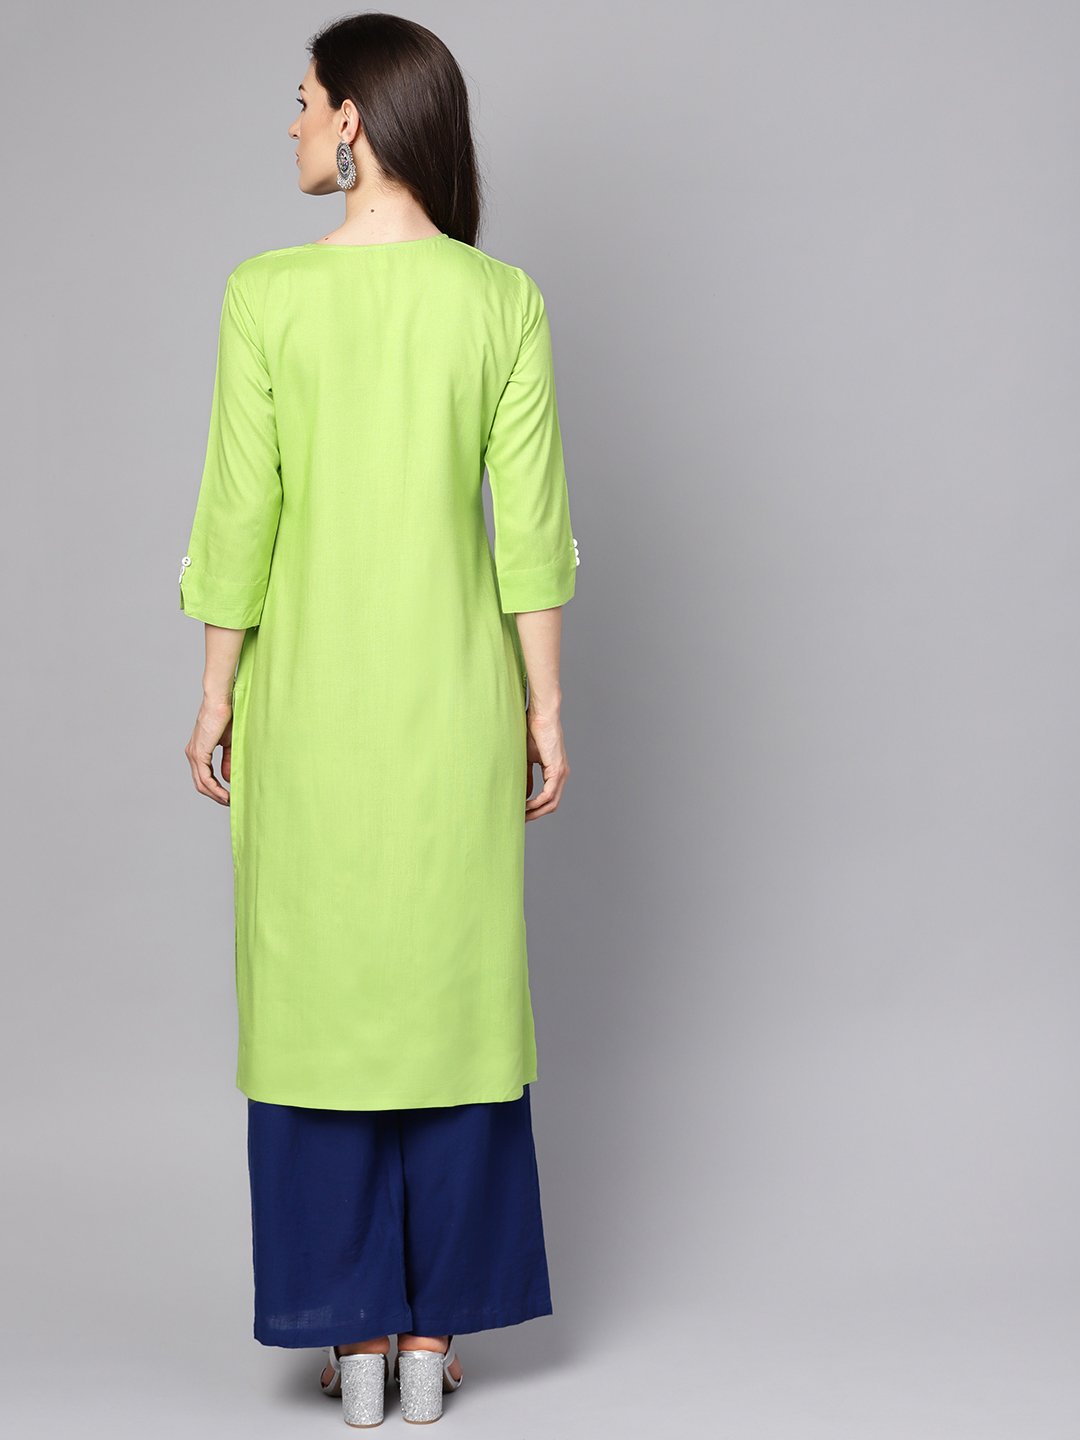 Women's Green 3/4Th Sleeve Rayon Embriodery Kurta - Nayo Clothing